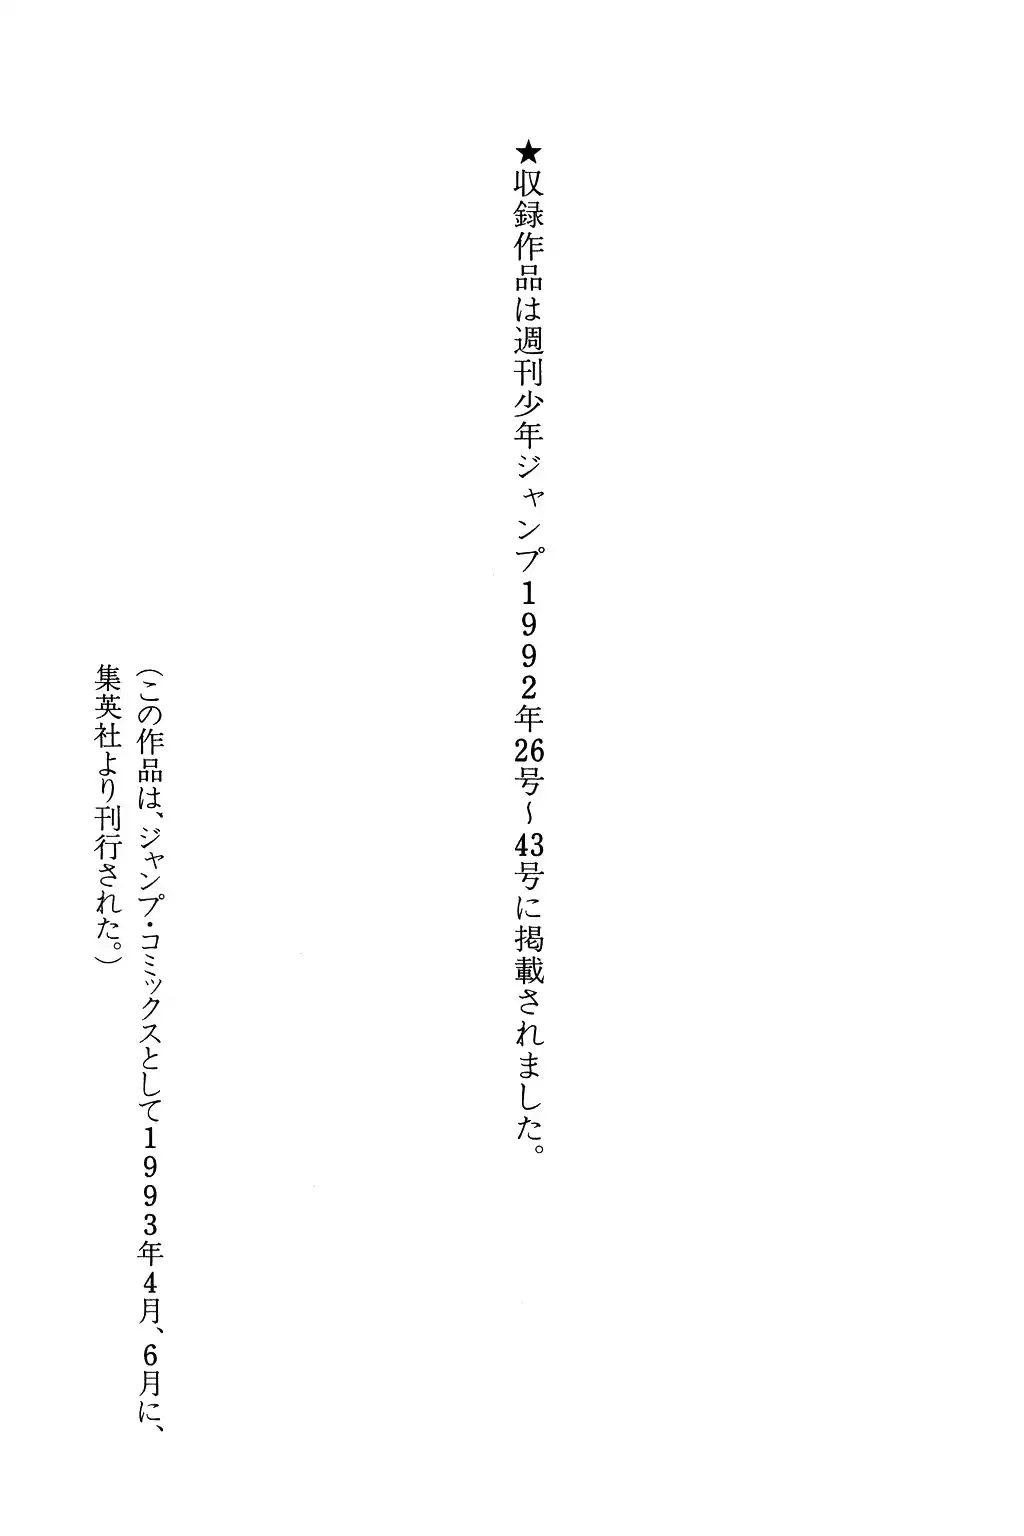 Dragon Quest Dai no Daibouken Chapter 151